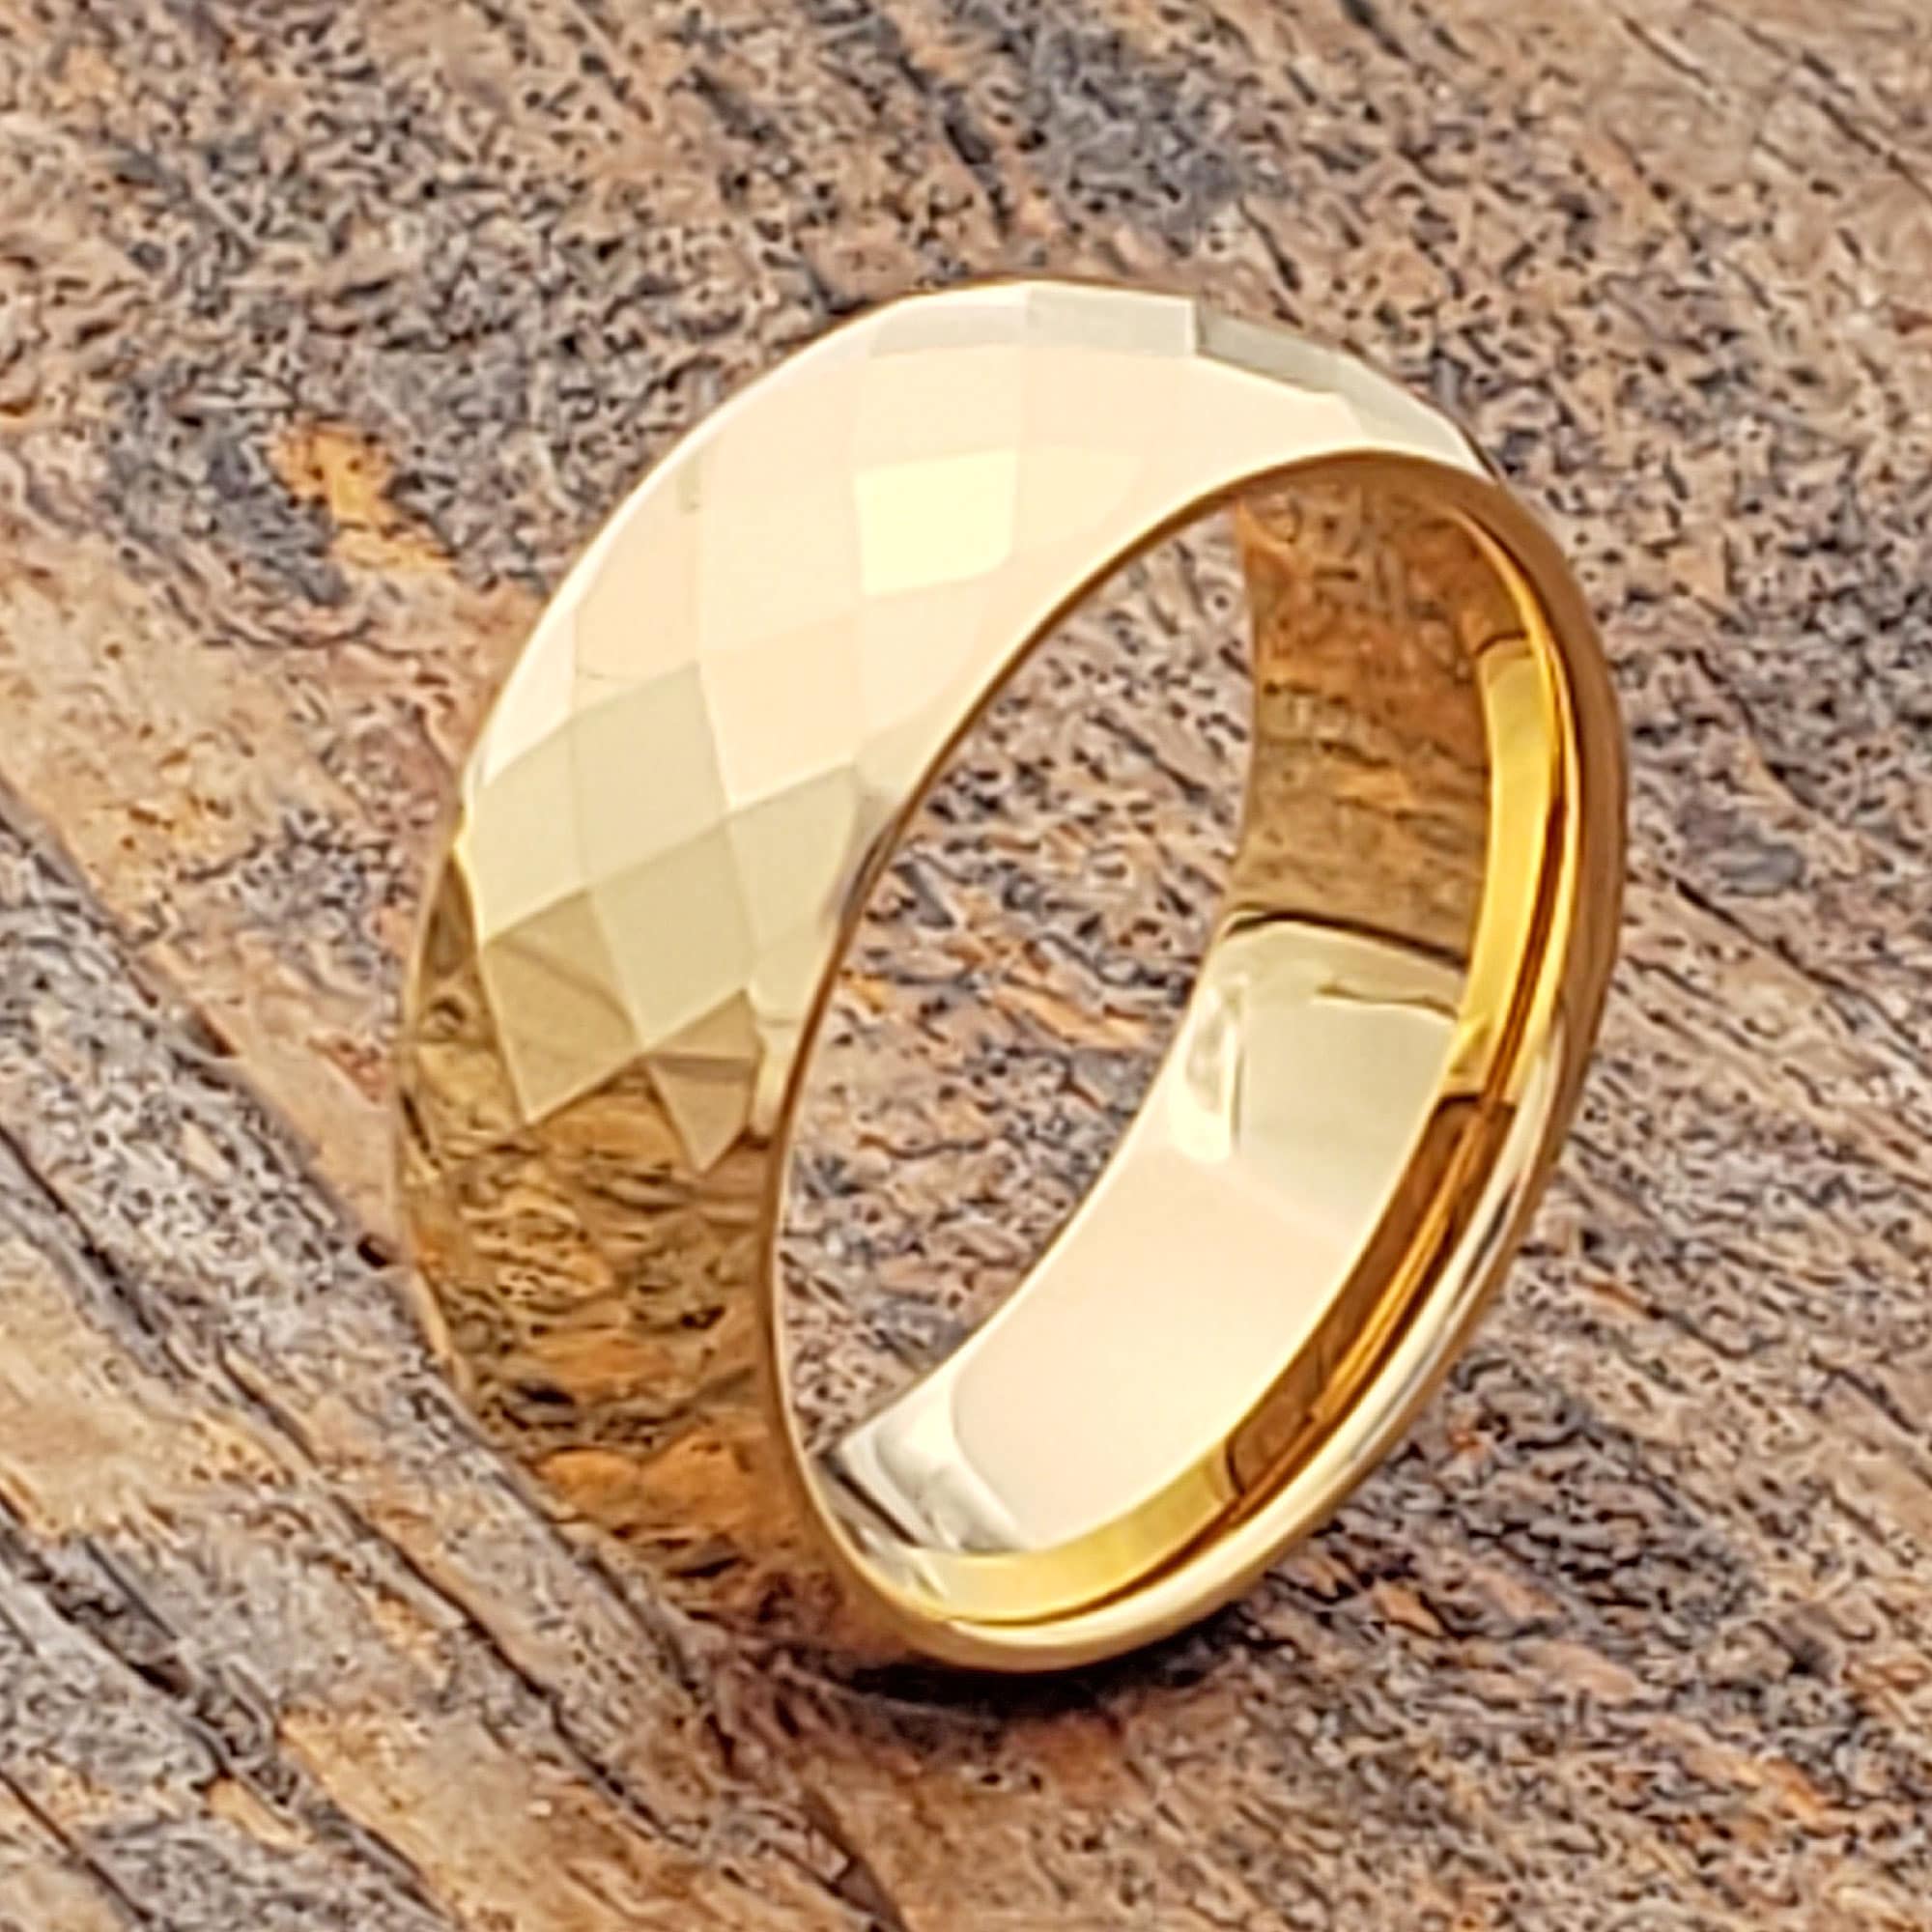 golden rings for ladies